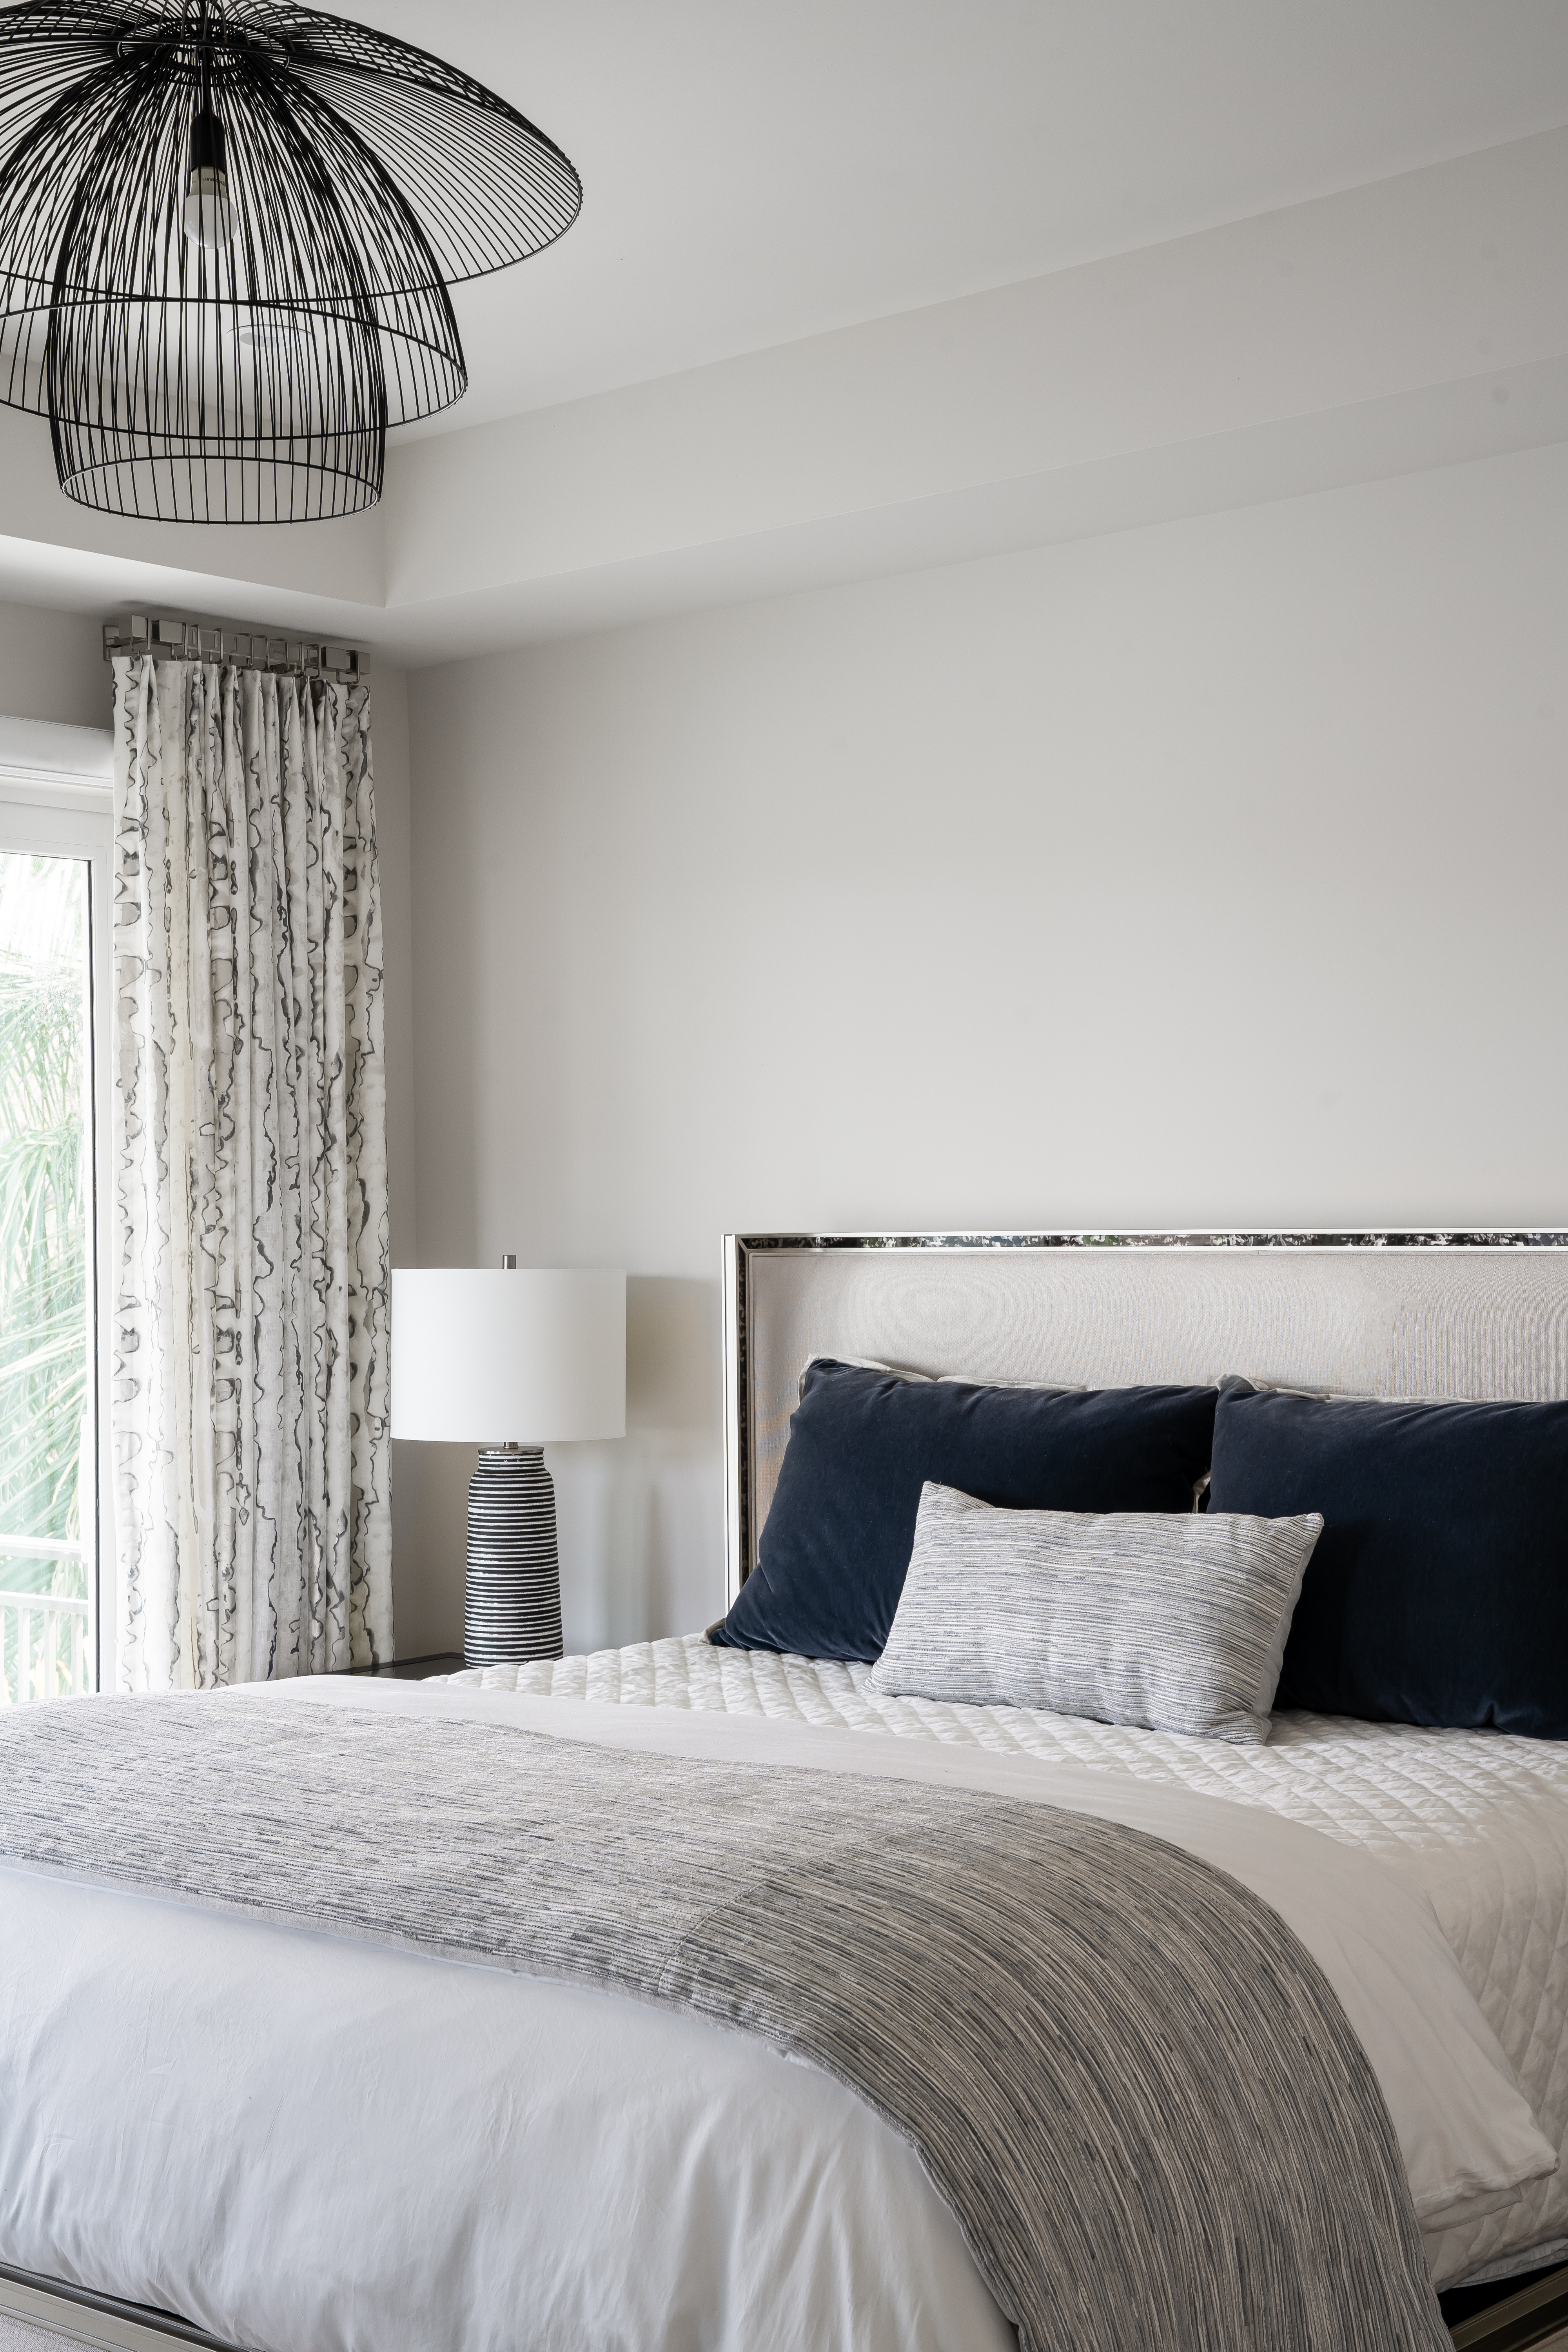 A coastal contemporary guest bedroom design with a neutral palette, designed by Florida interior designer Brooke Meyer of Gulfshore Interior Design